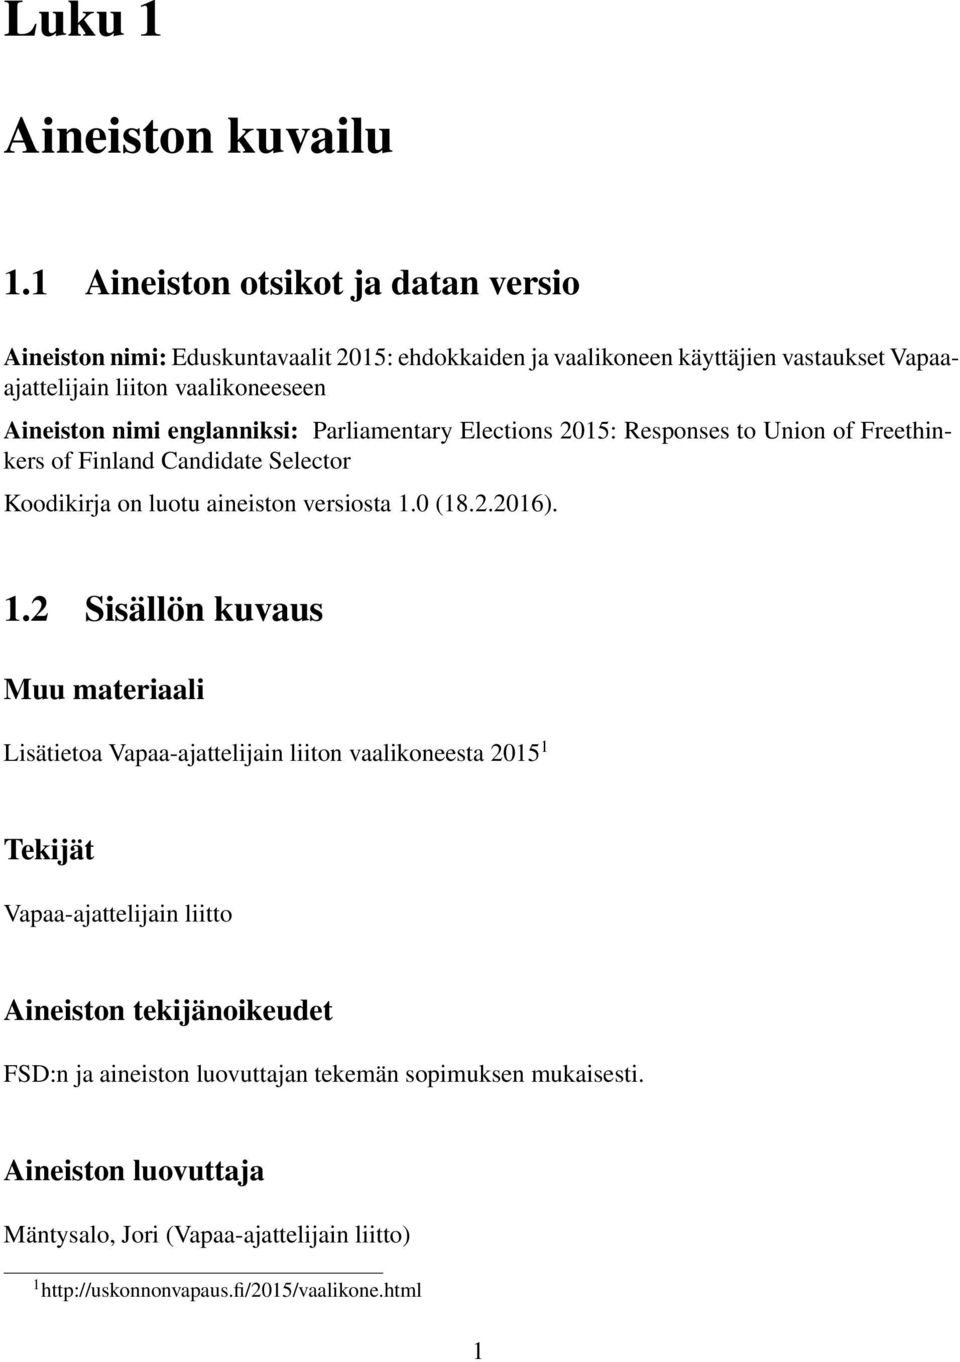 nimi englanniksi: Parliamentary Elections 2015: Responses to Union of Freethinkers of Finland Candidate Selector Koodikirja on luotu aineiston versiosta 1.